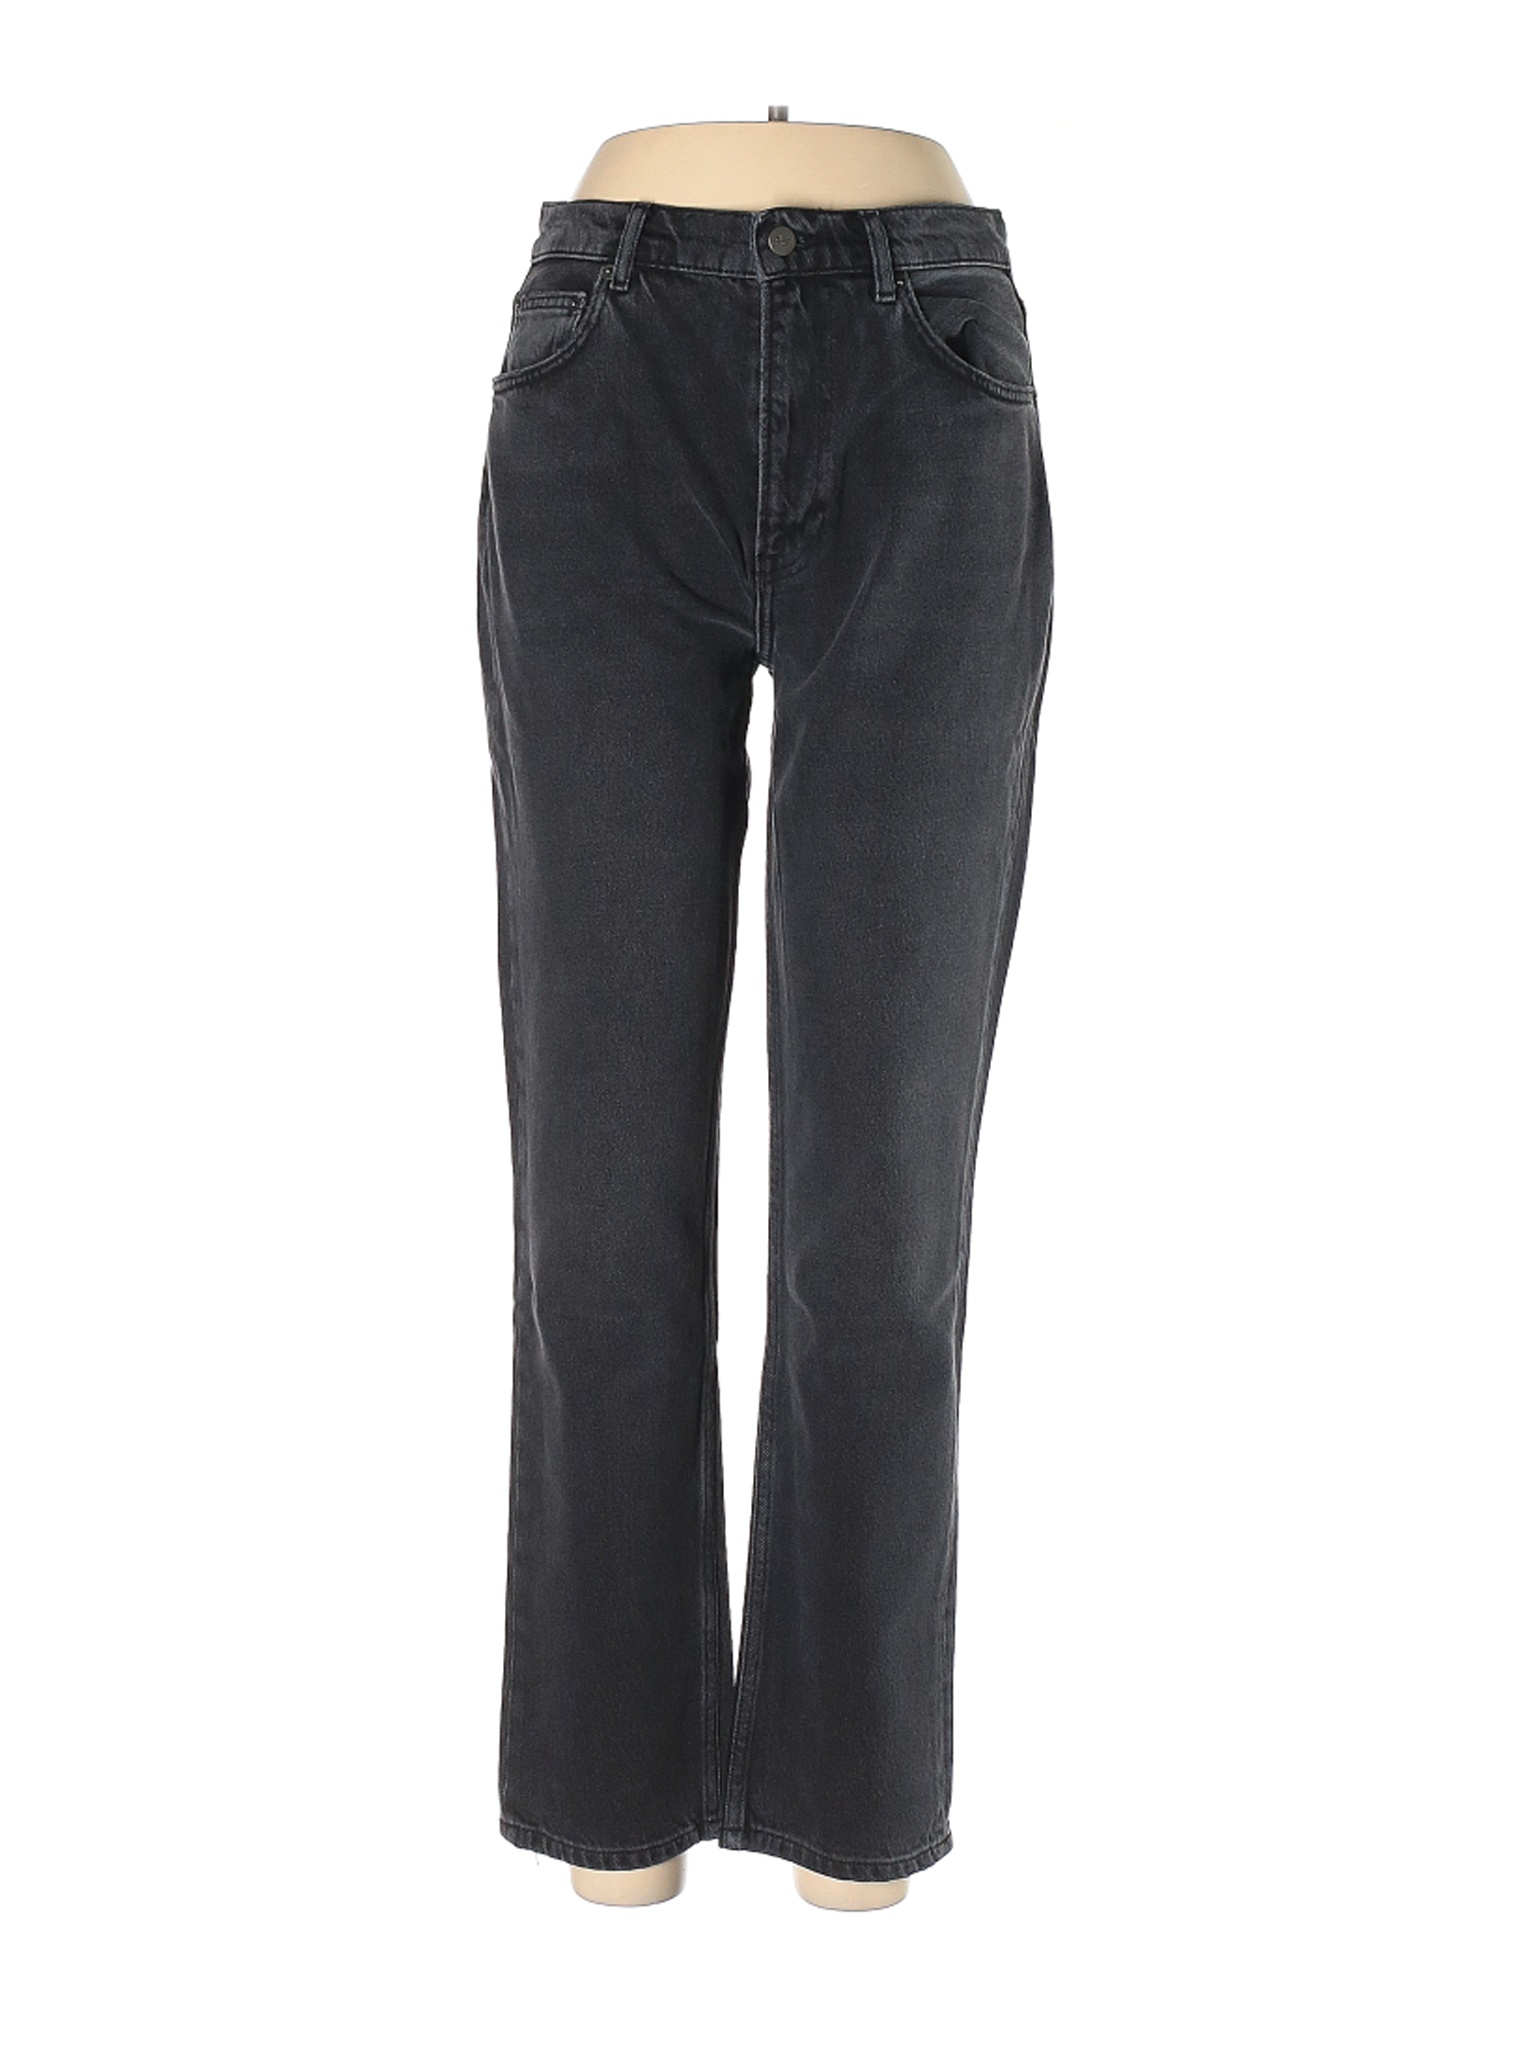 NWT Reformation Women Black Jeans 29W | eBay